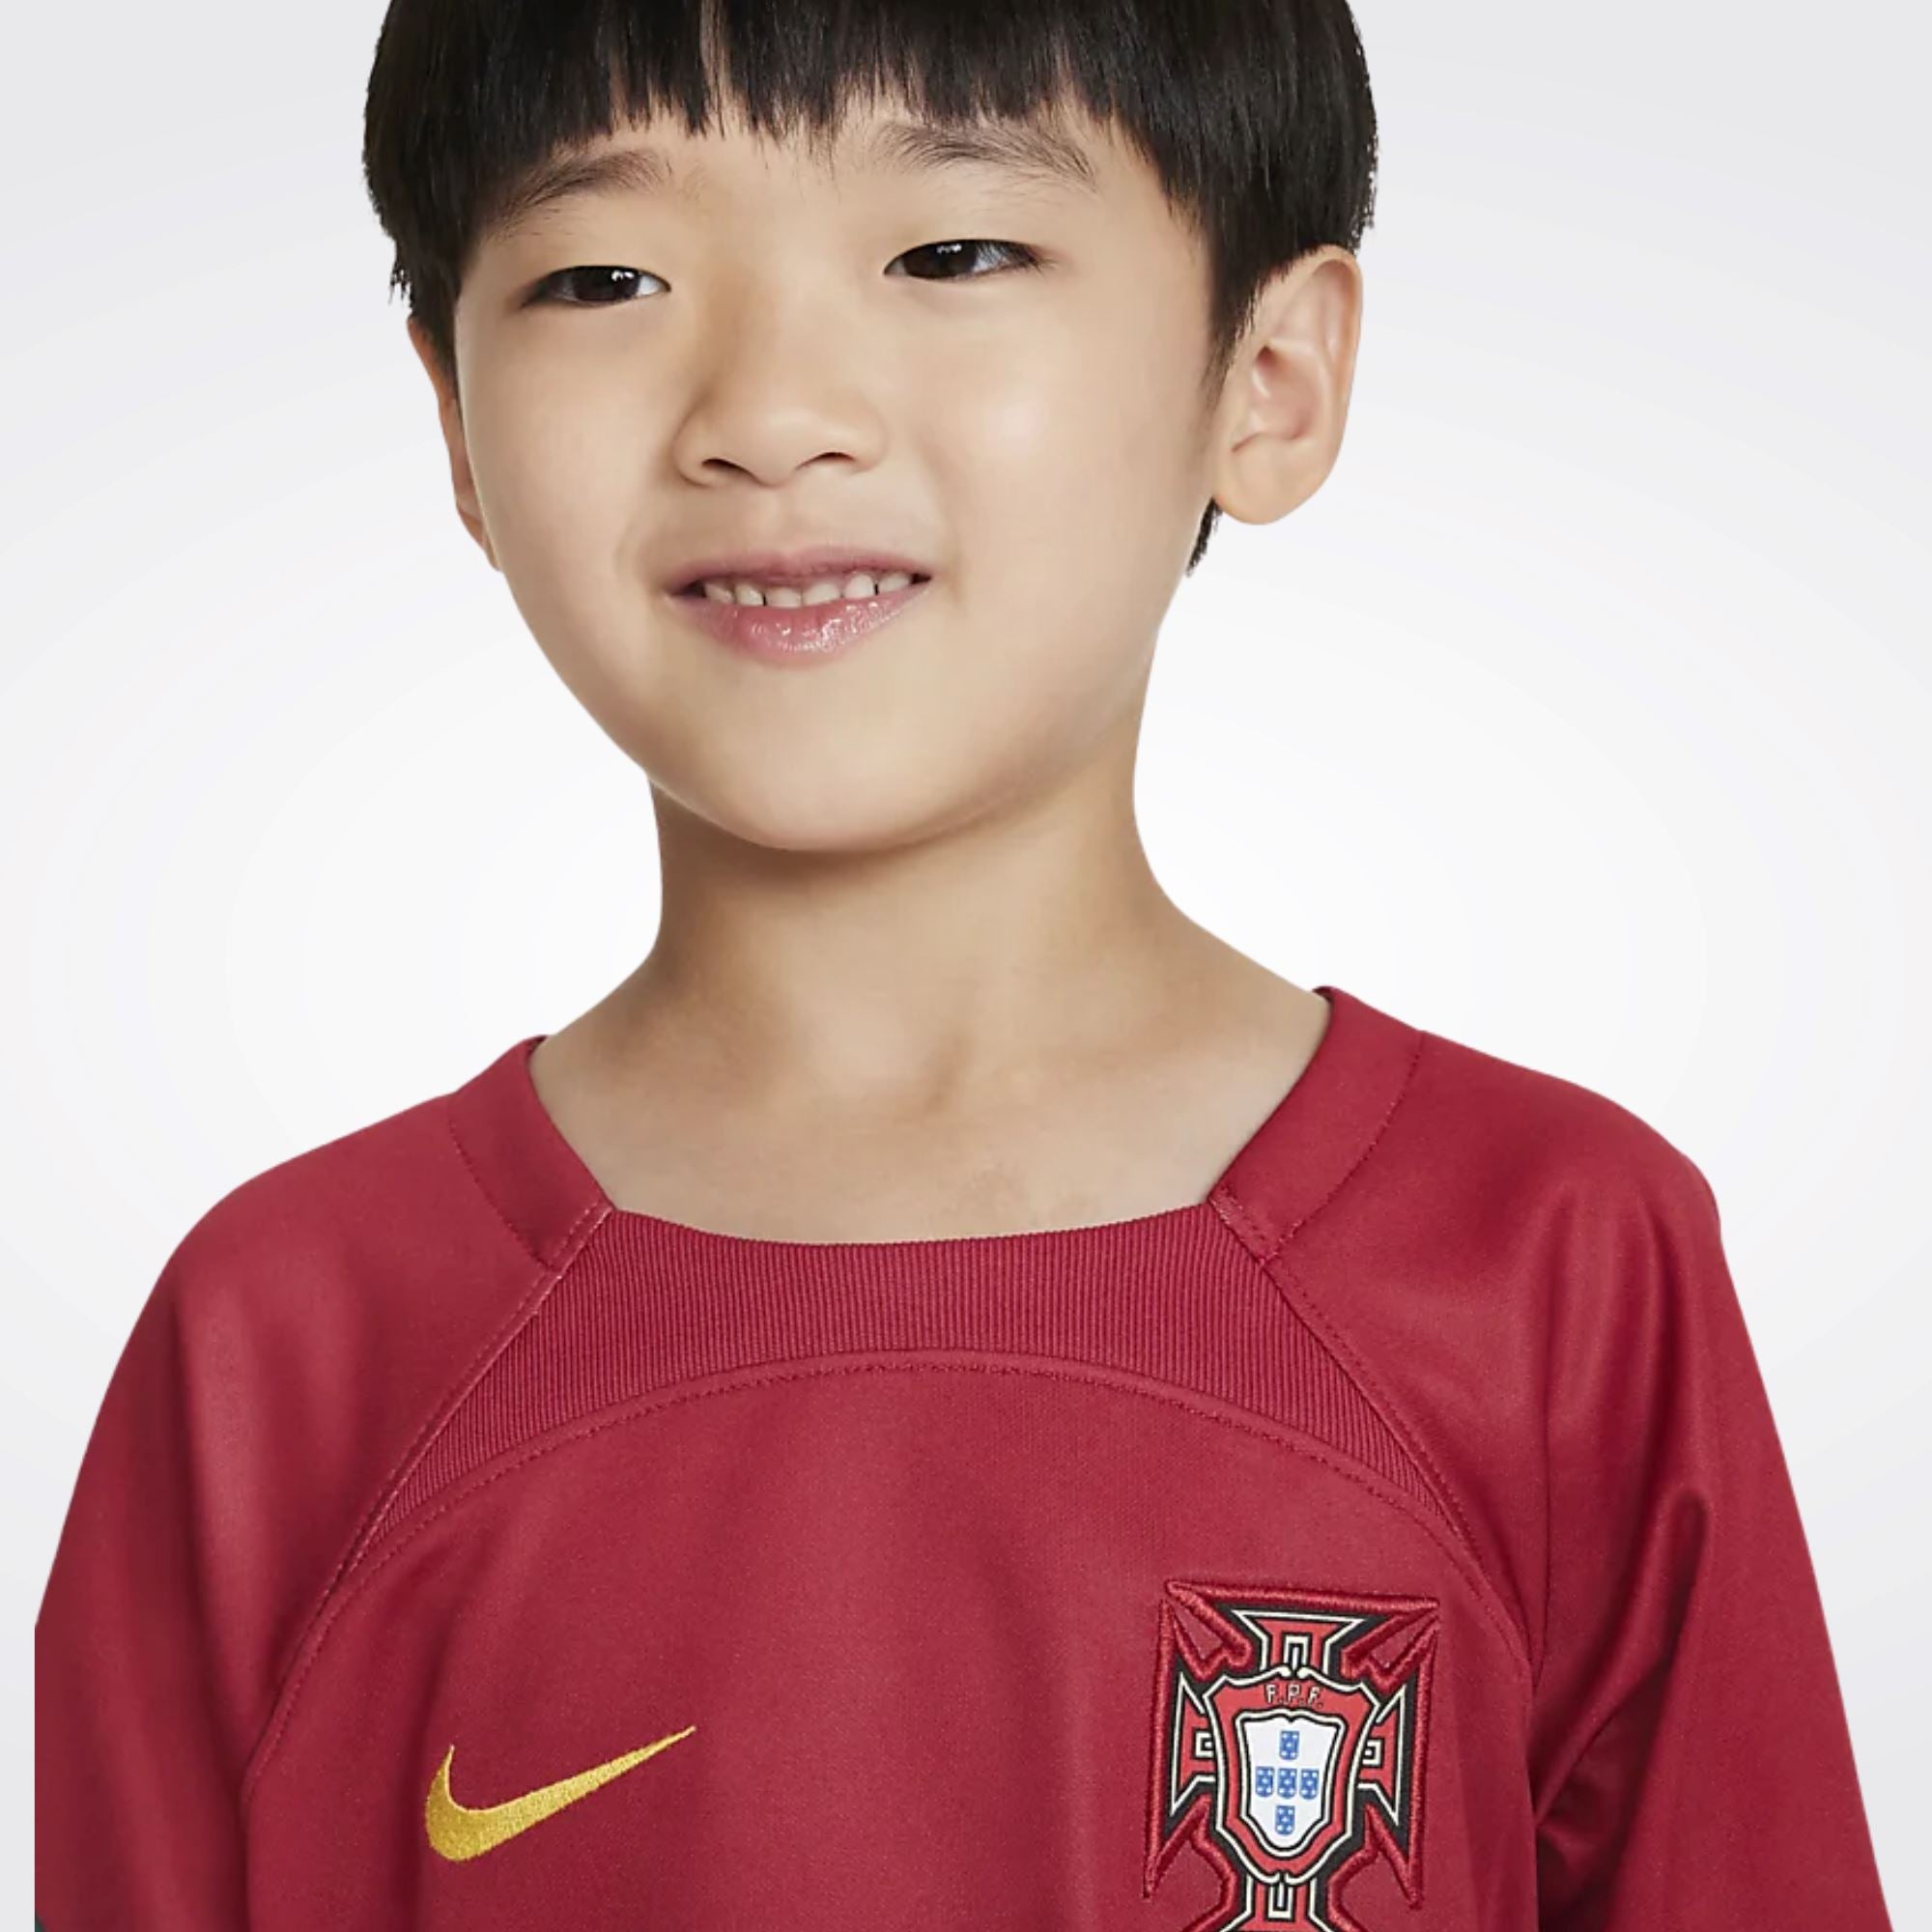 Kids Portugal Home Jersey Ronaldo 7 - ITASPORT